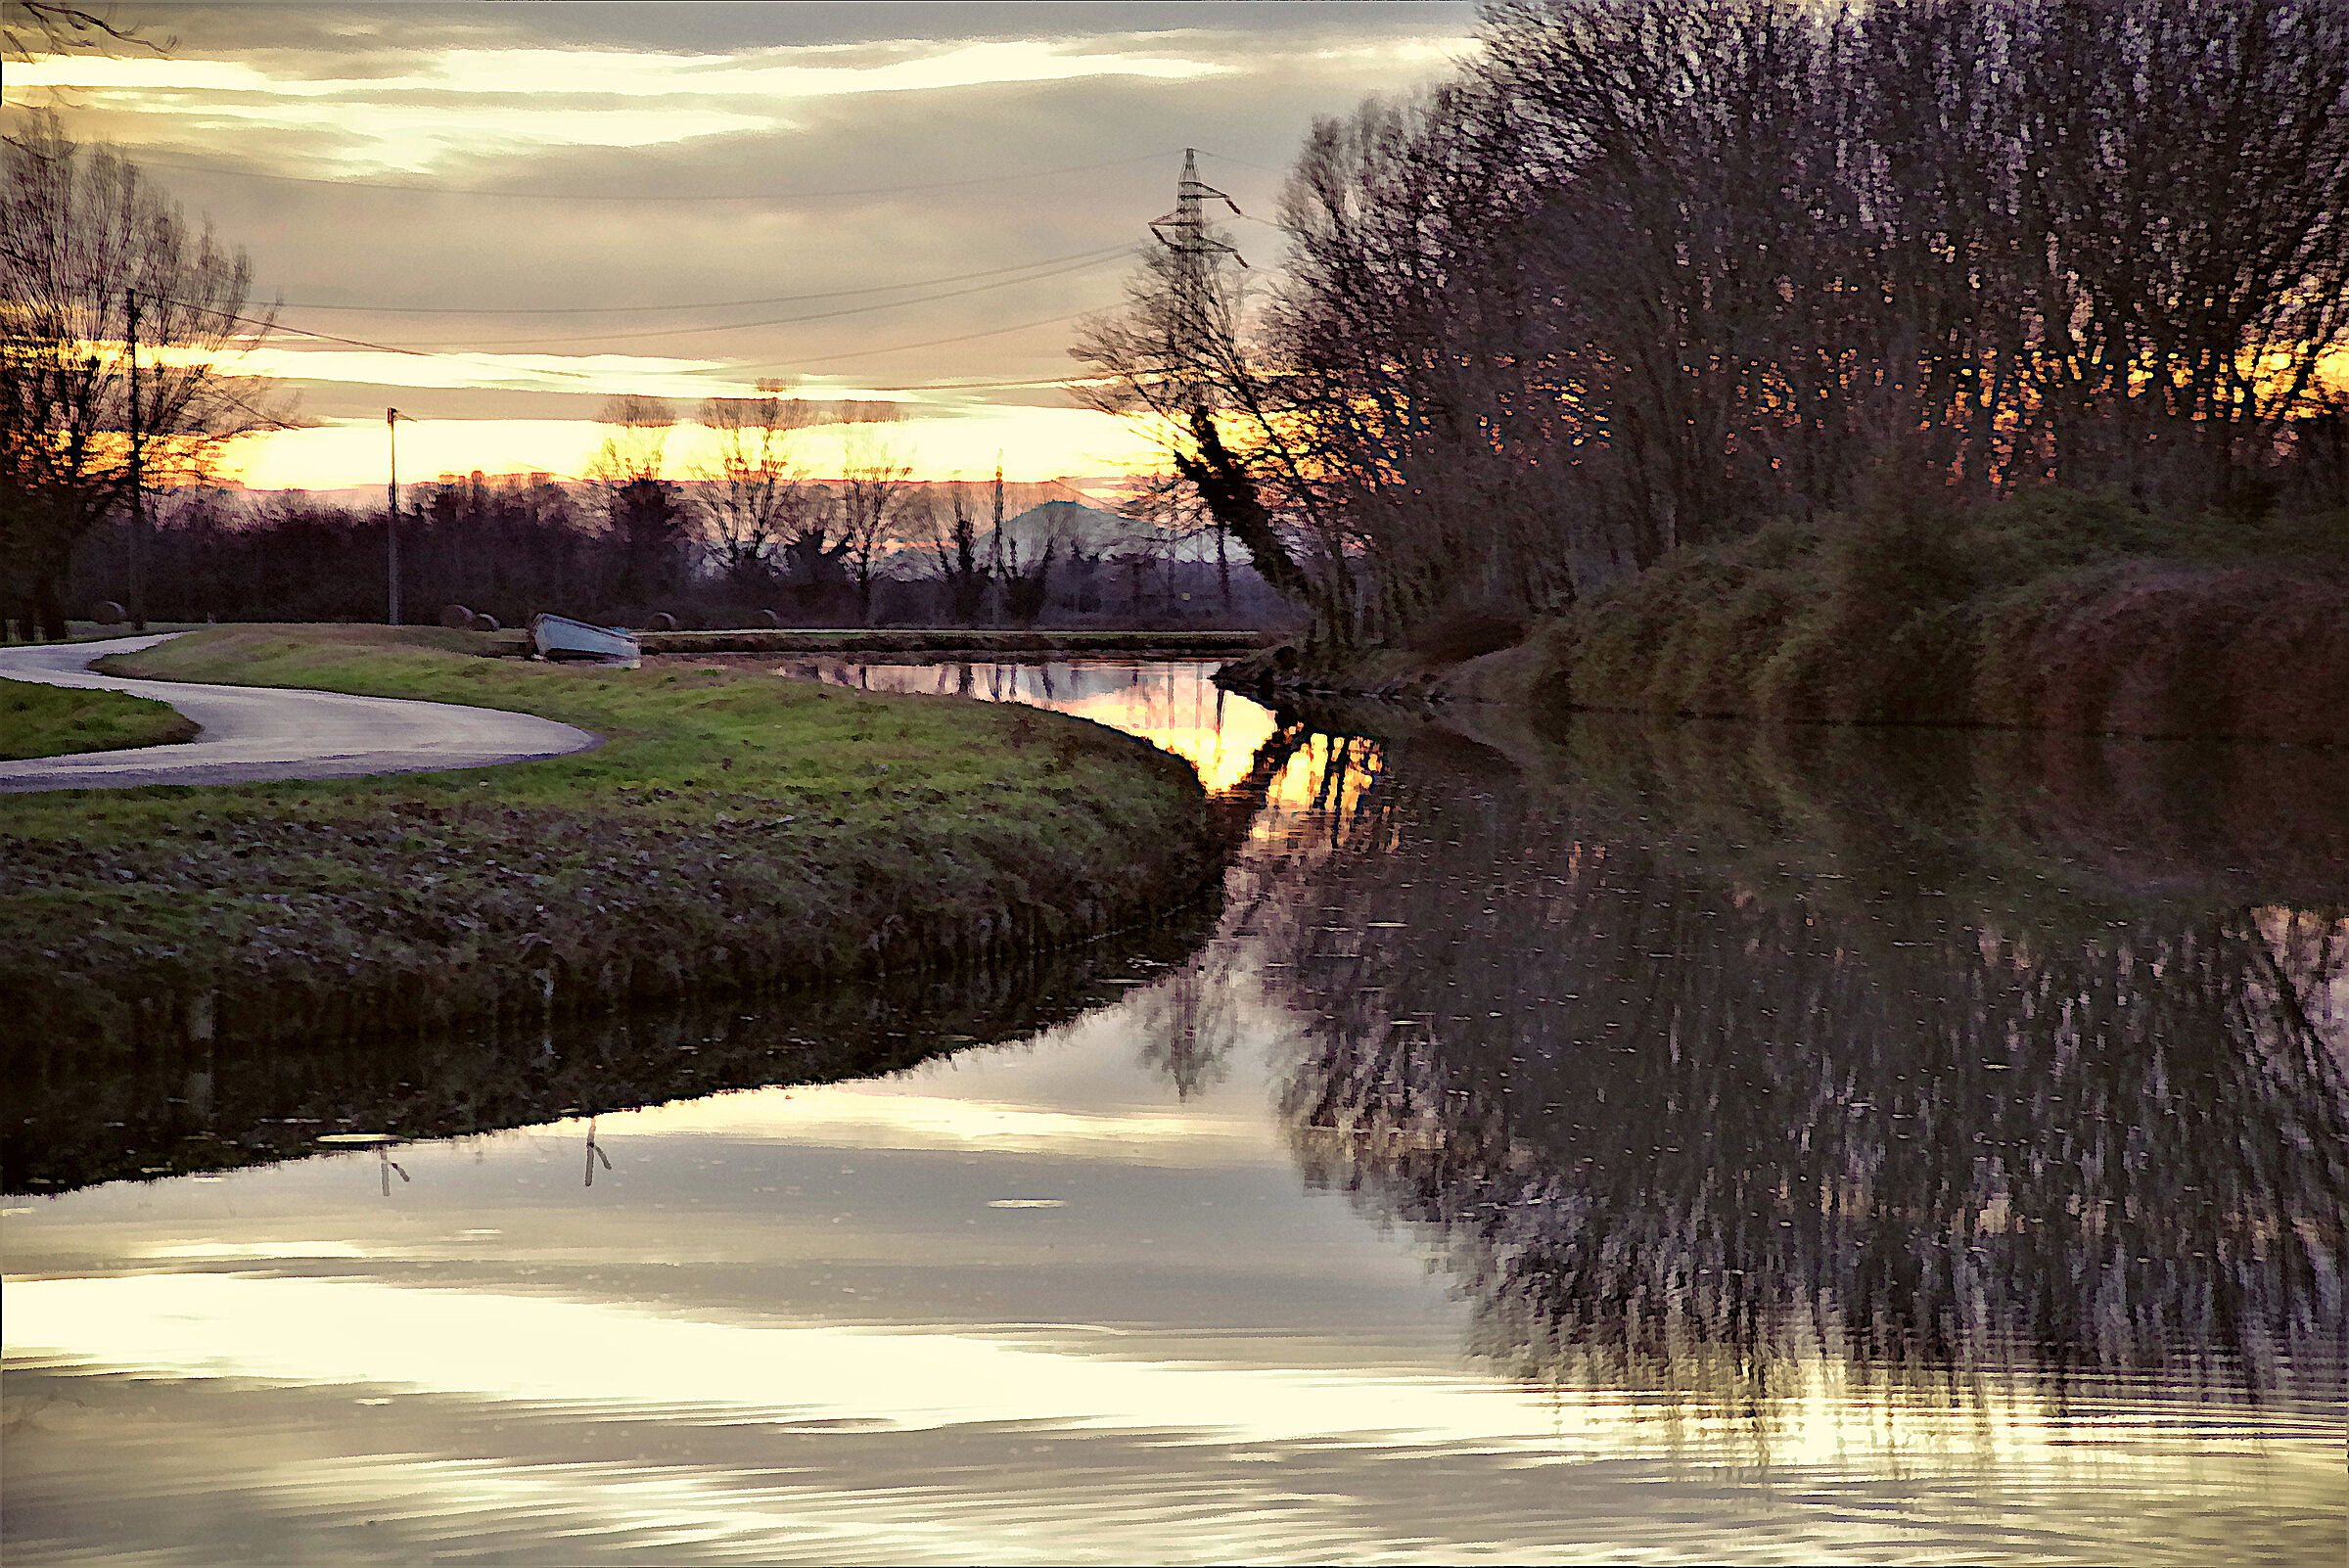 Ansa on the canal...